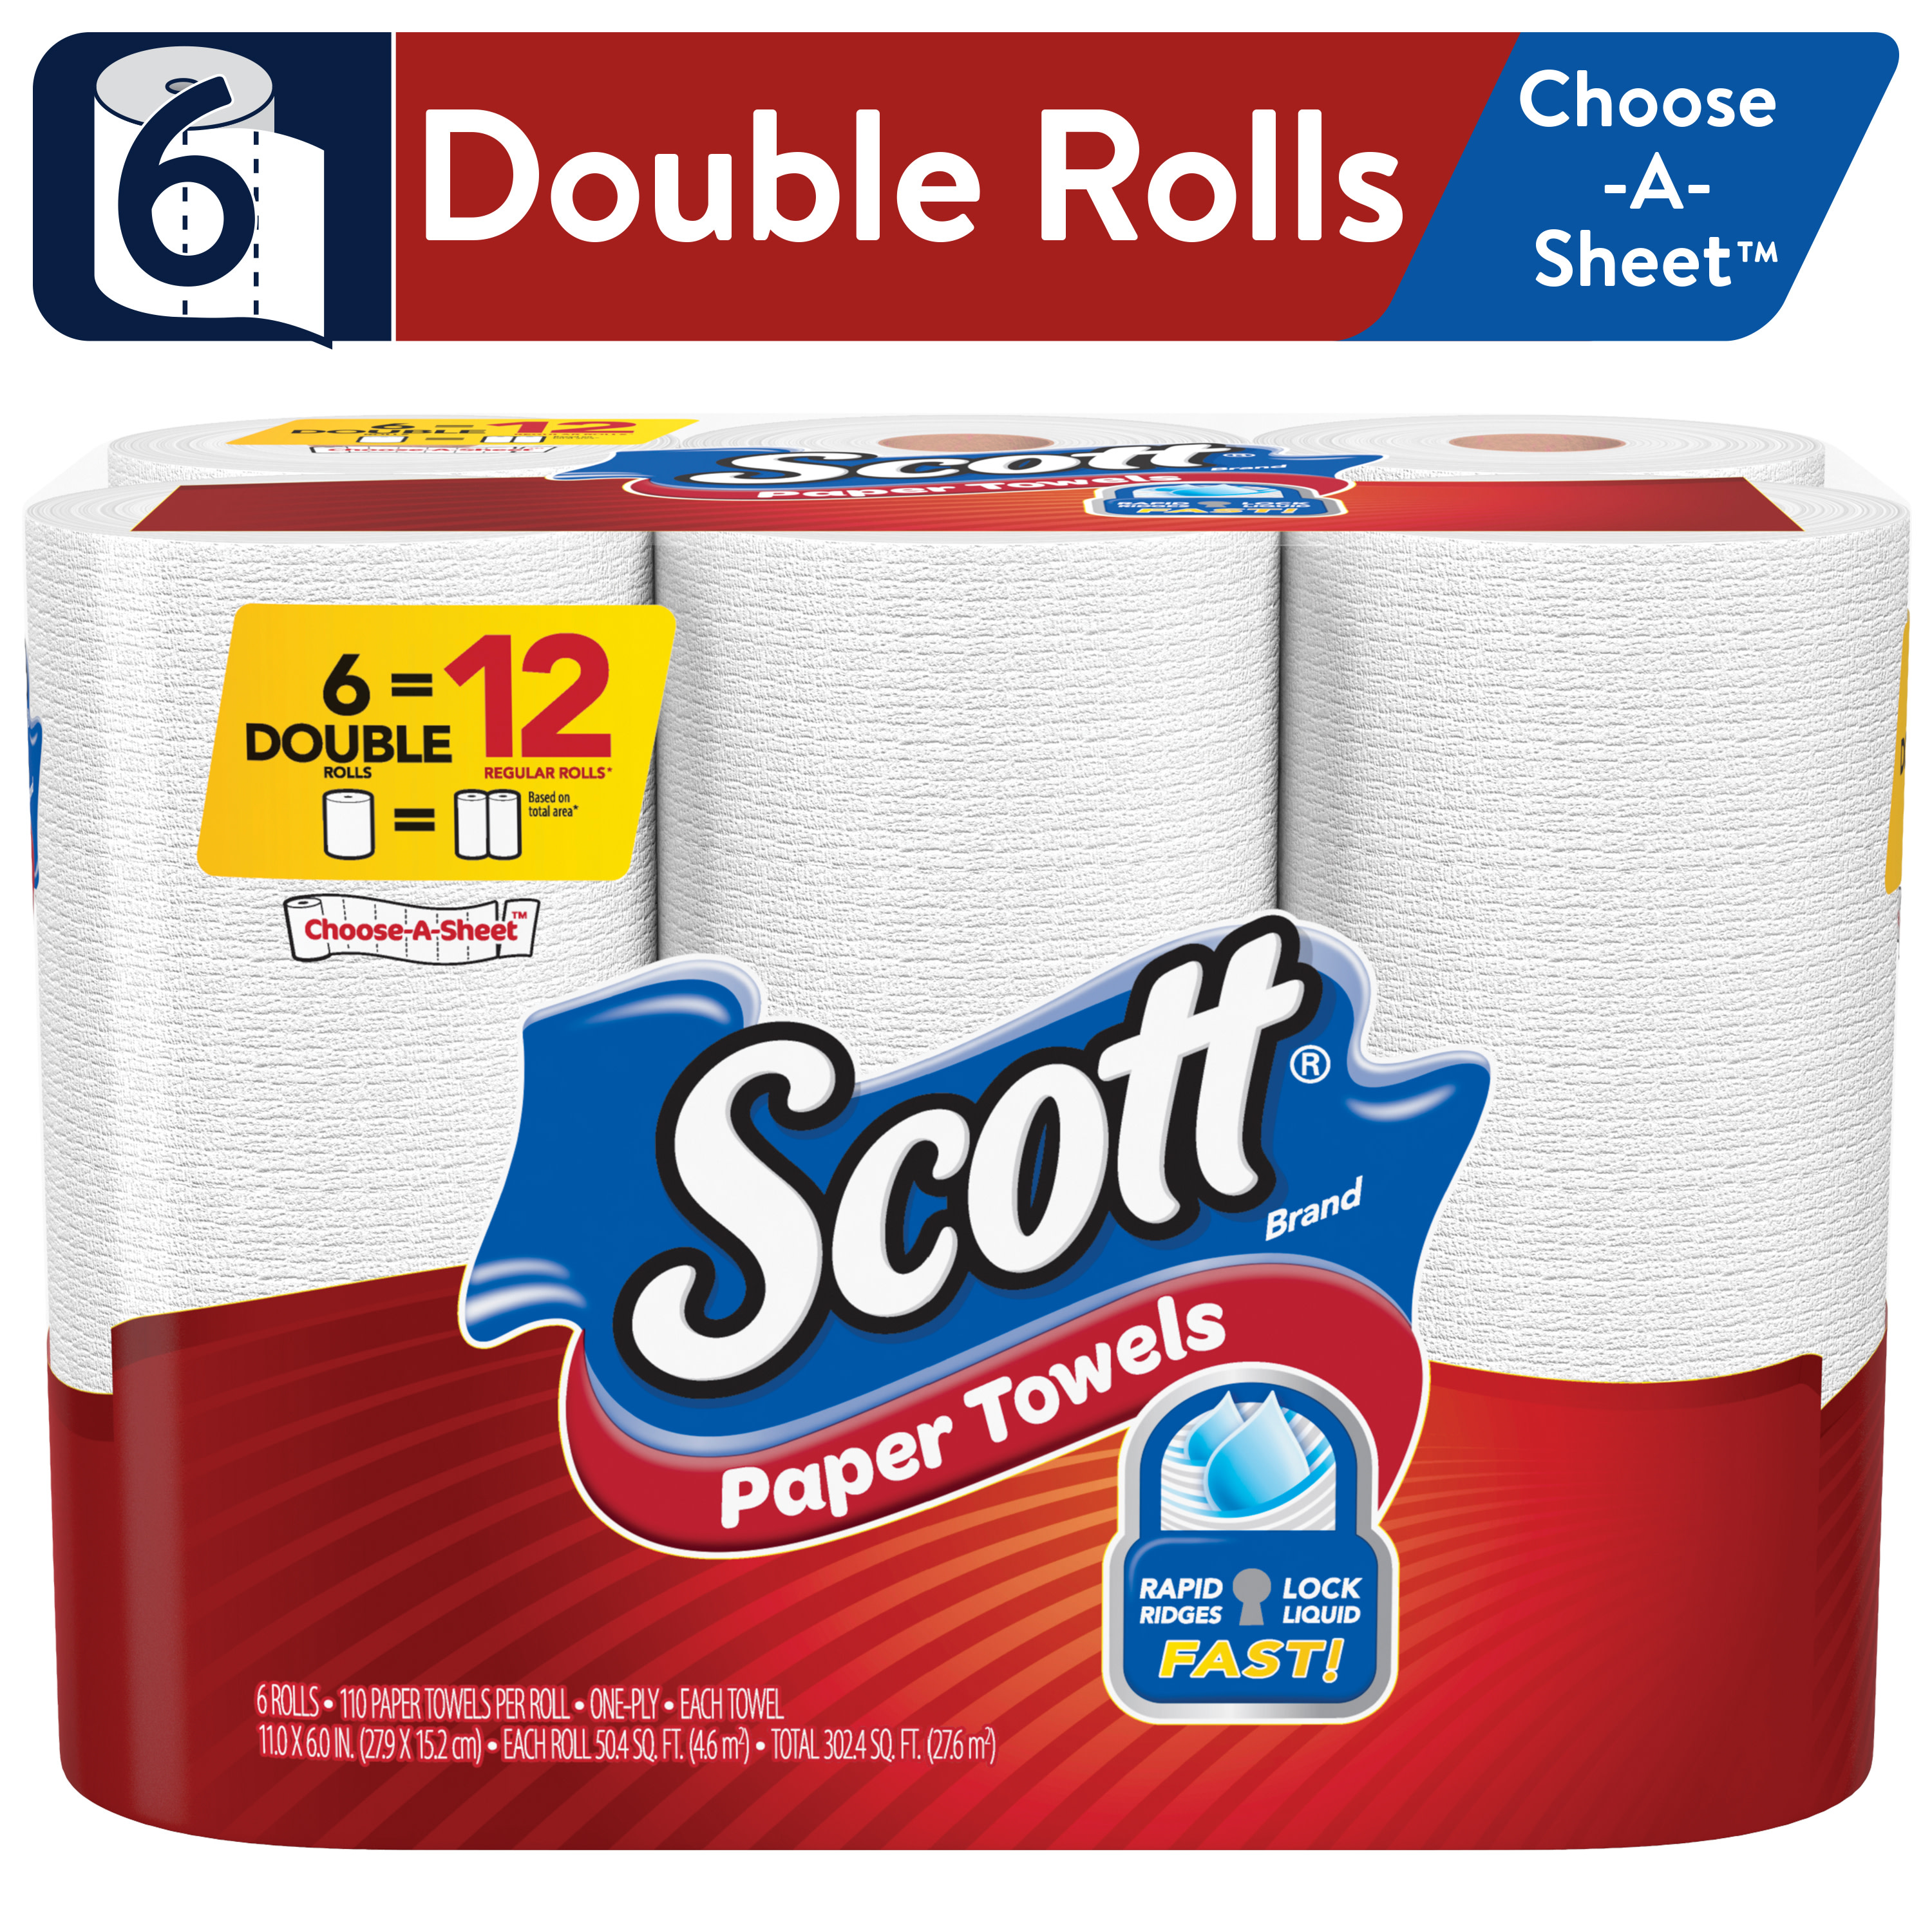 Scott Choose-a-Sheet Paper Towels, 6 Double Rolls - image 1 of 10